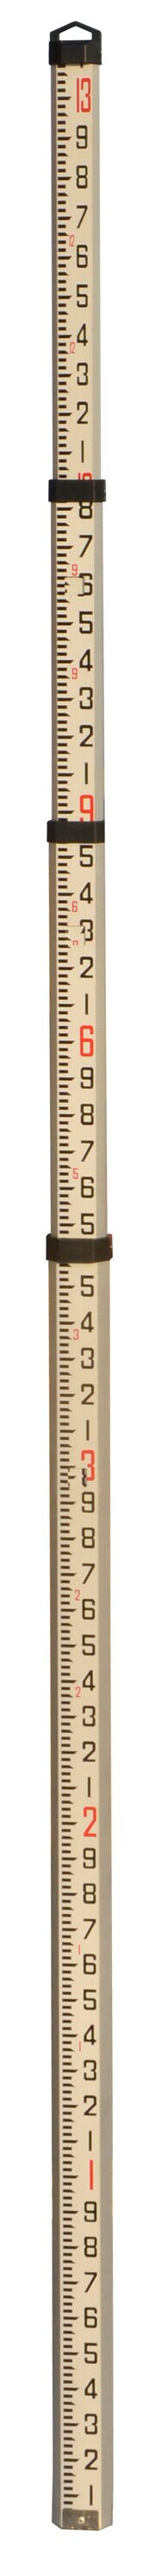 Buy Alloy 360 Brass Rod 1.5in Diameter Online